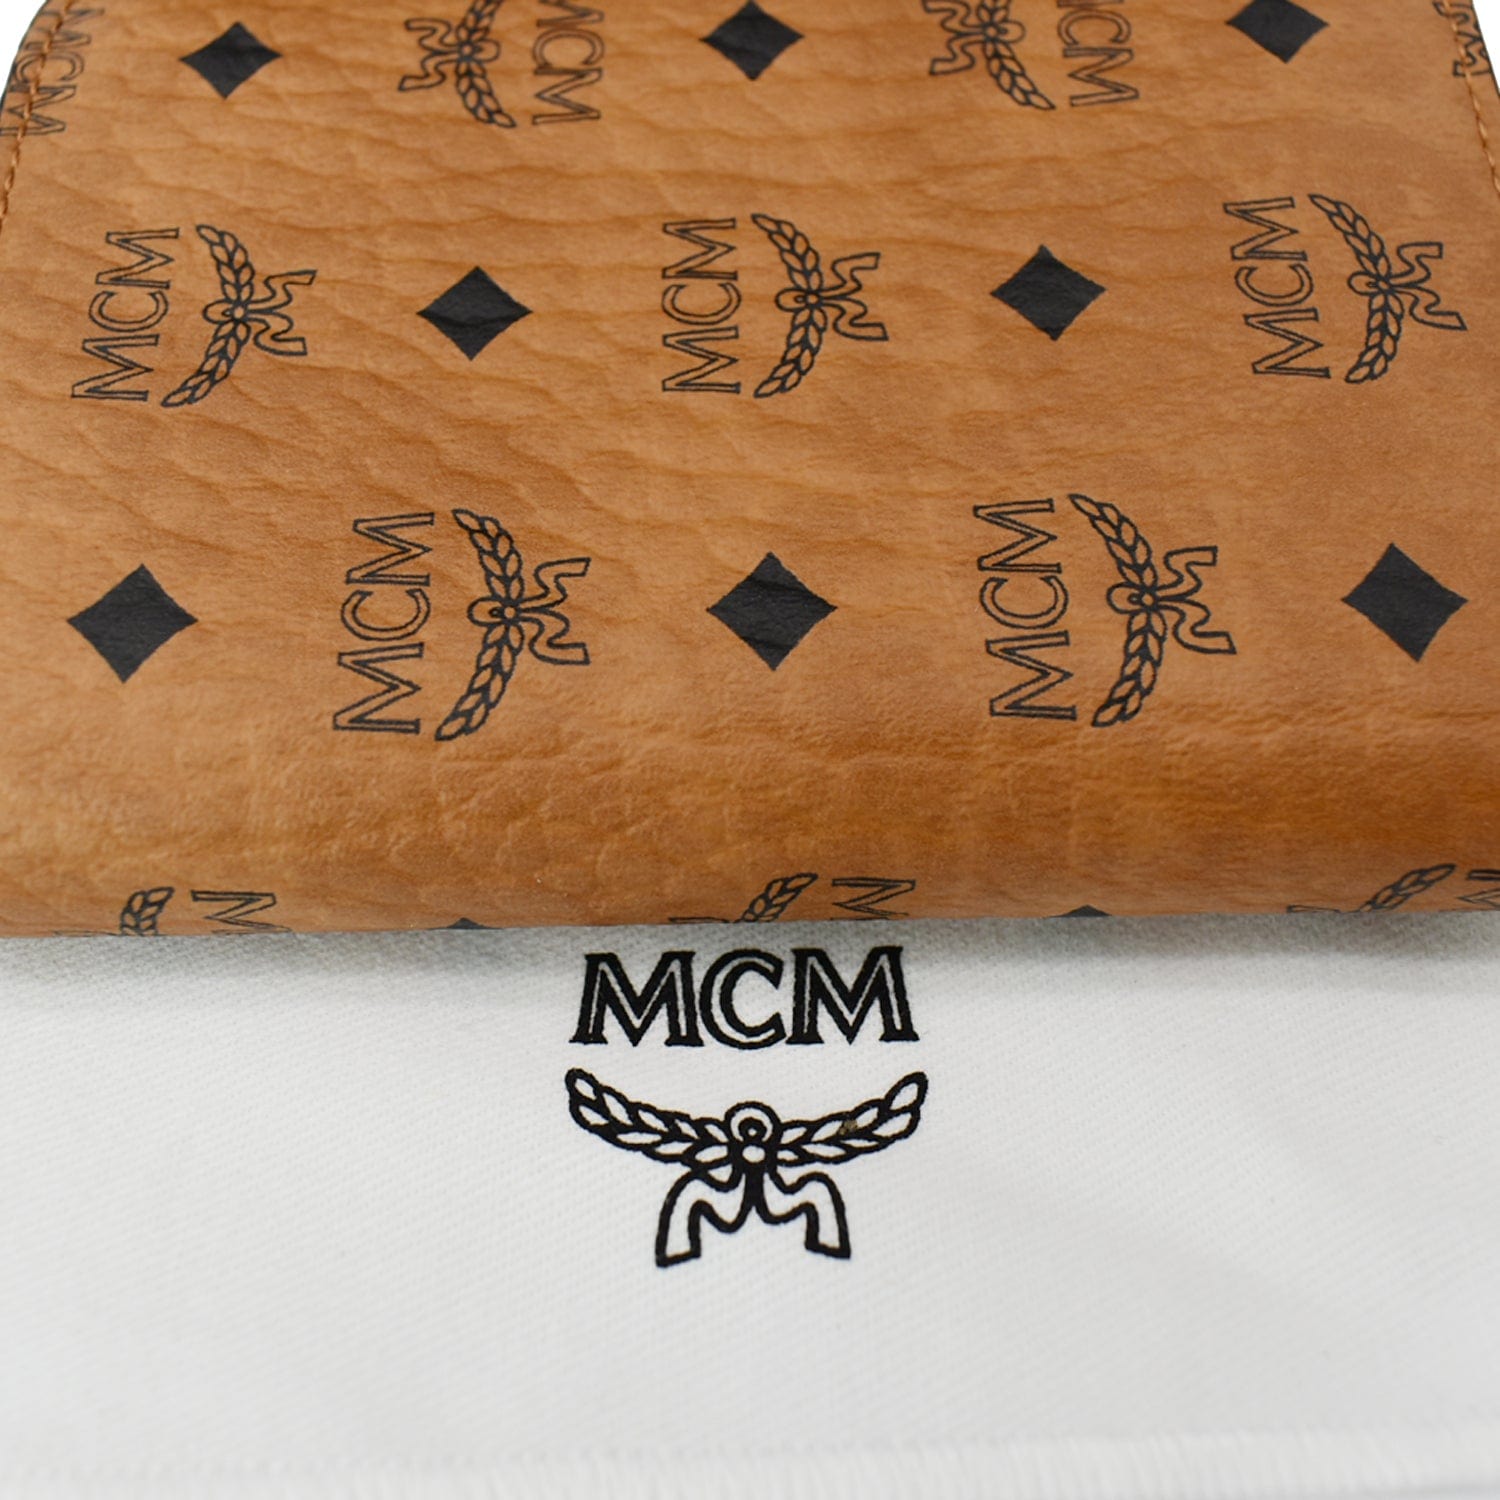 NEW Authentic MCM Bifold Card Wallet in Visetos Original COGNAC BROWN